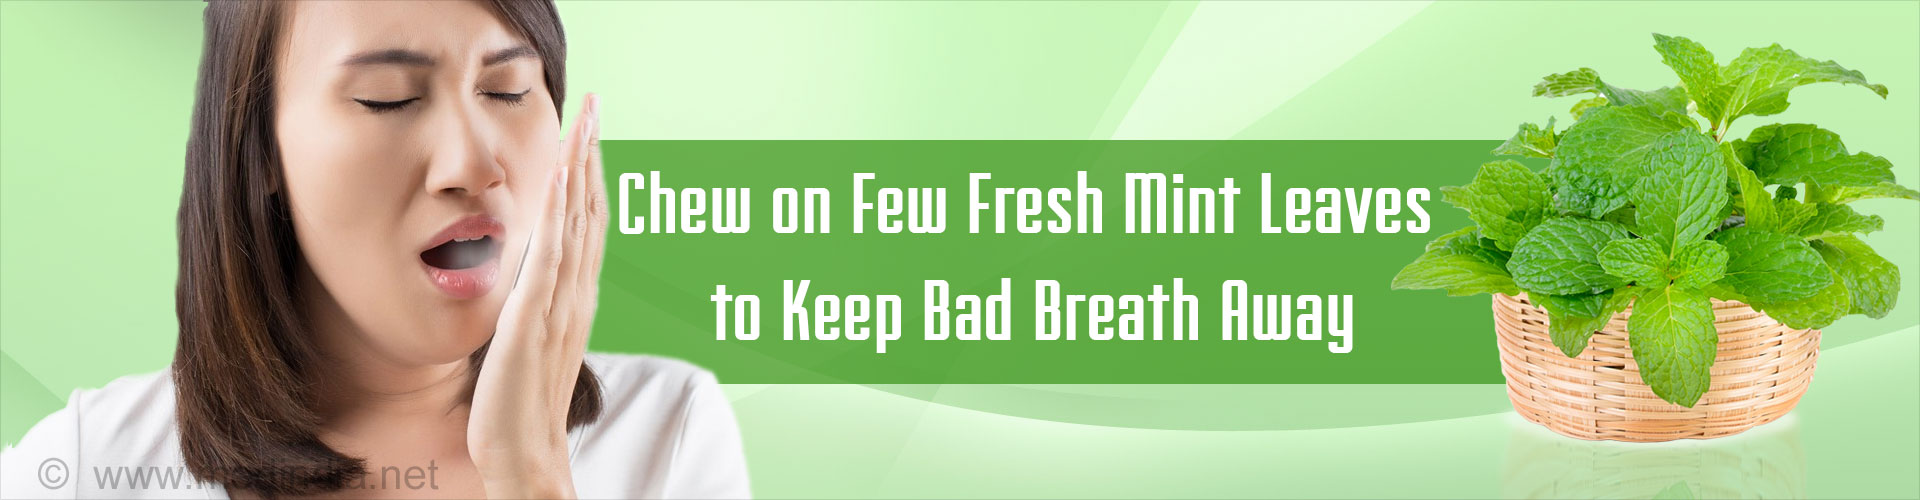 Chew on Few Fresh Mint Leaves to Keep Bad Breath Away